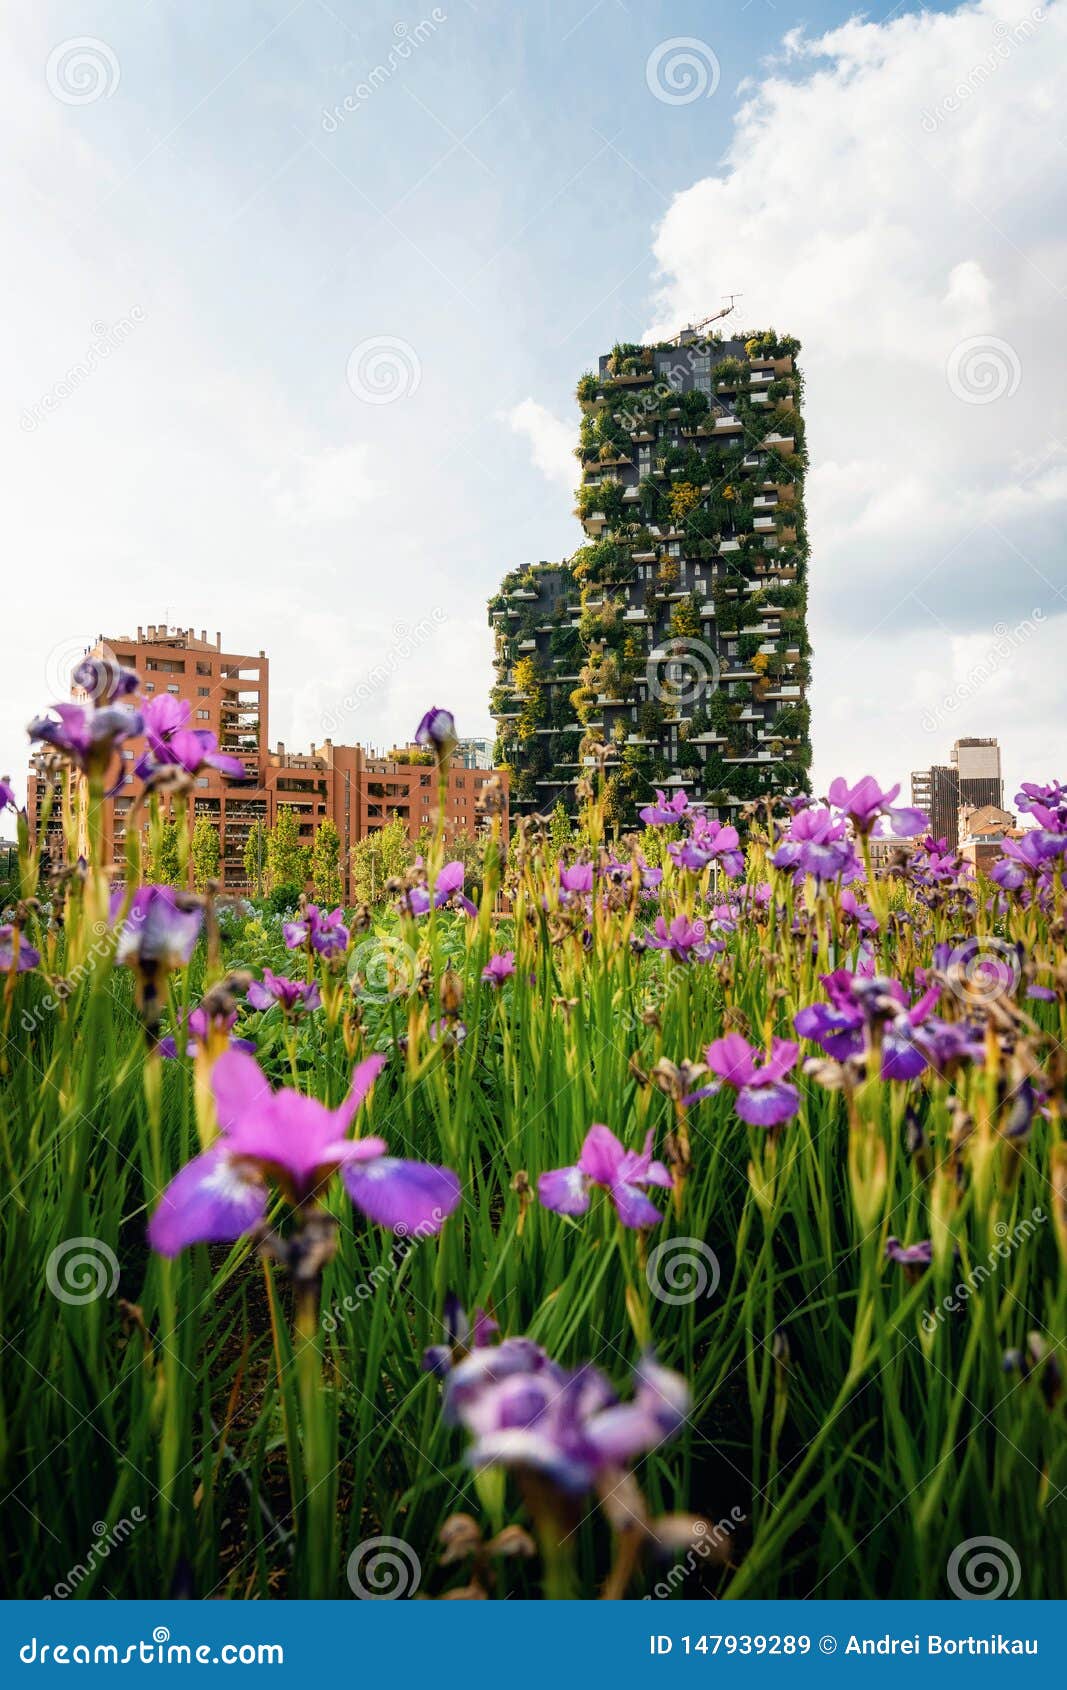 iris flowers against bosco verticale, milano, italy